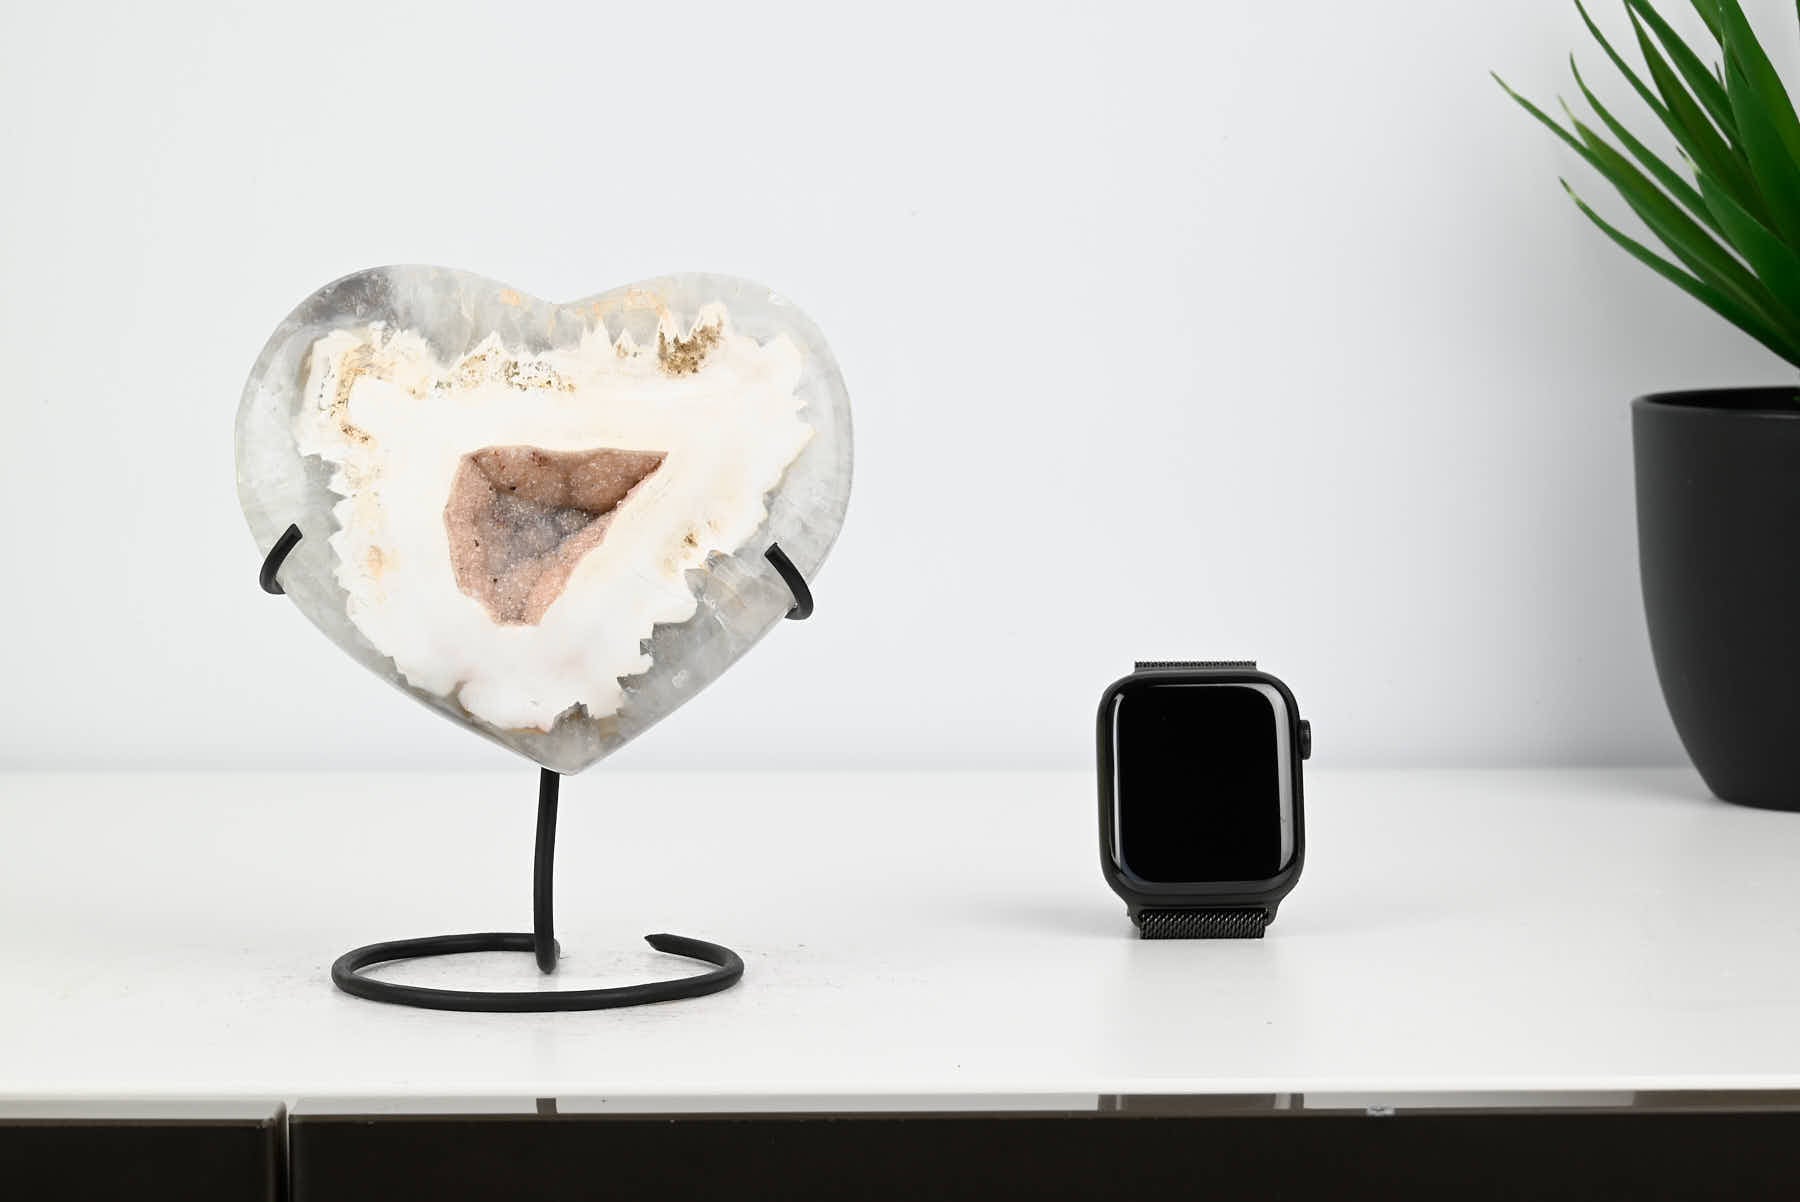 Extra Quality Agate Crystal Heart - 0.62kg, 12cm high - #HTAGAT-34019